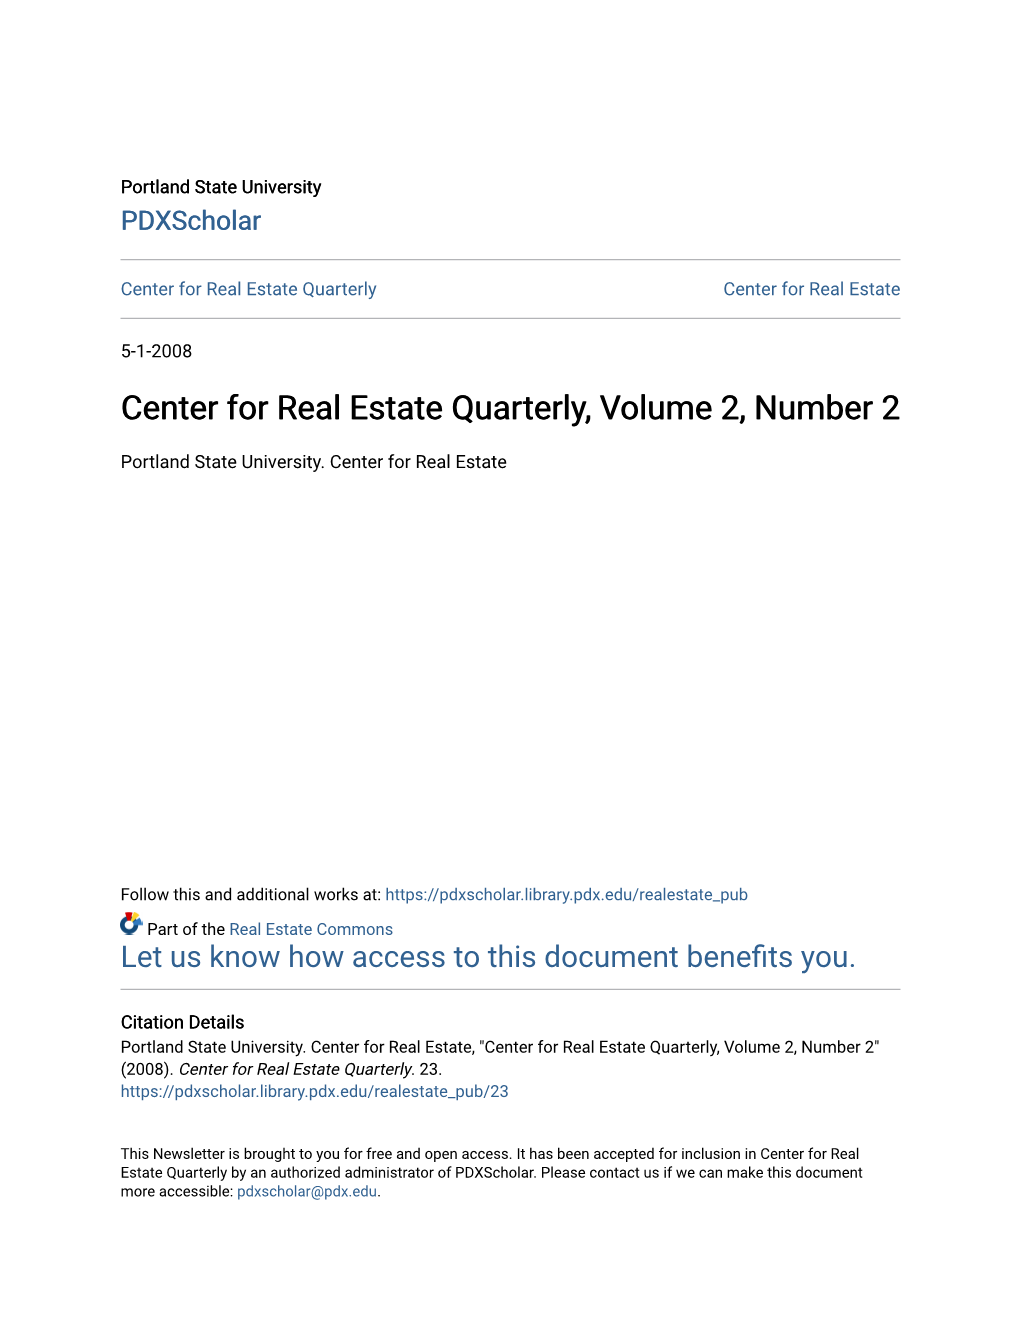 Center for Real Estate Quarterly, Volume 2, Number 2